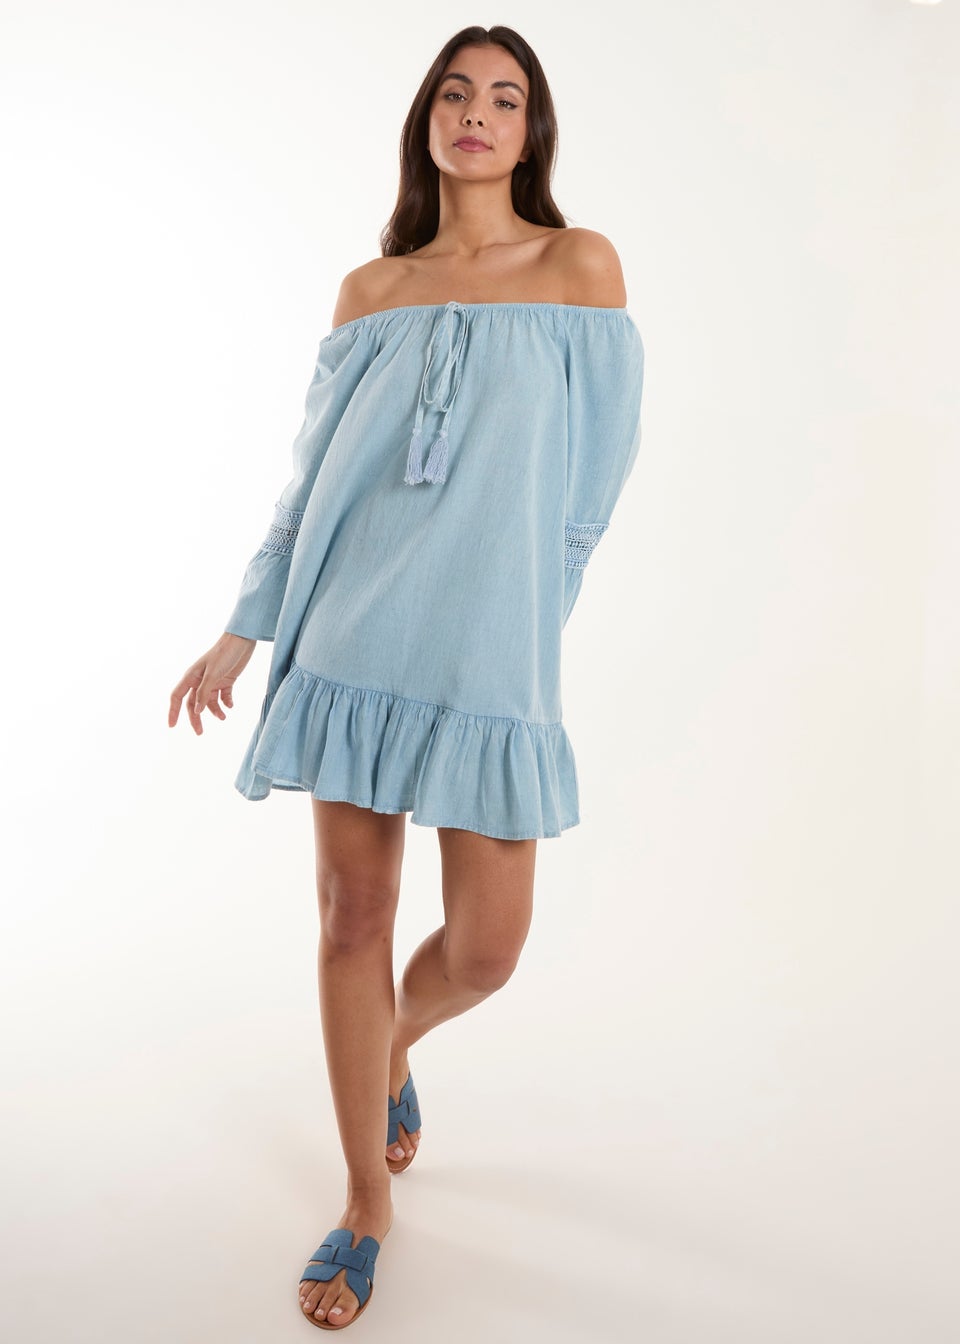 Blue Vanilla Blue Lace Trim Tunic Dress